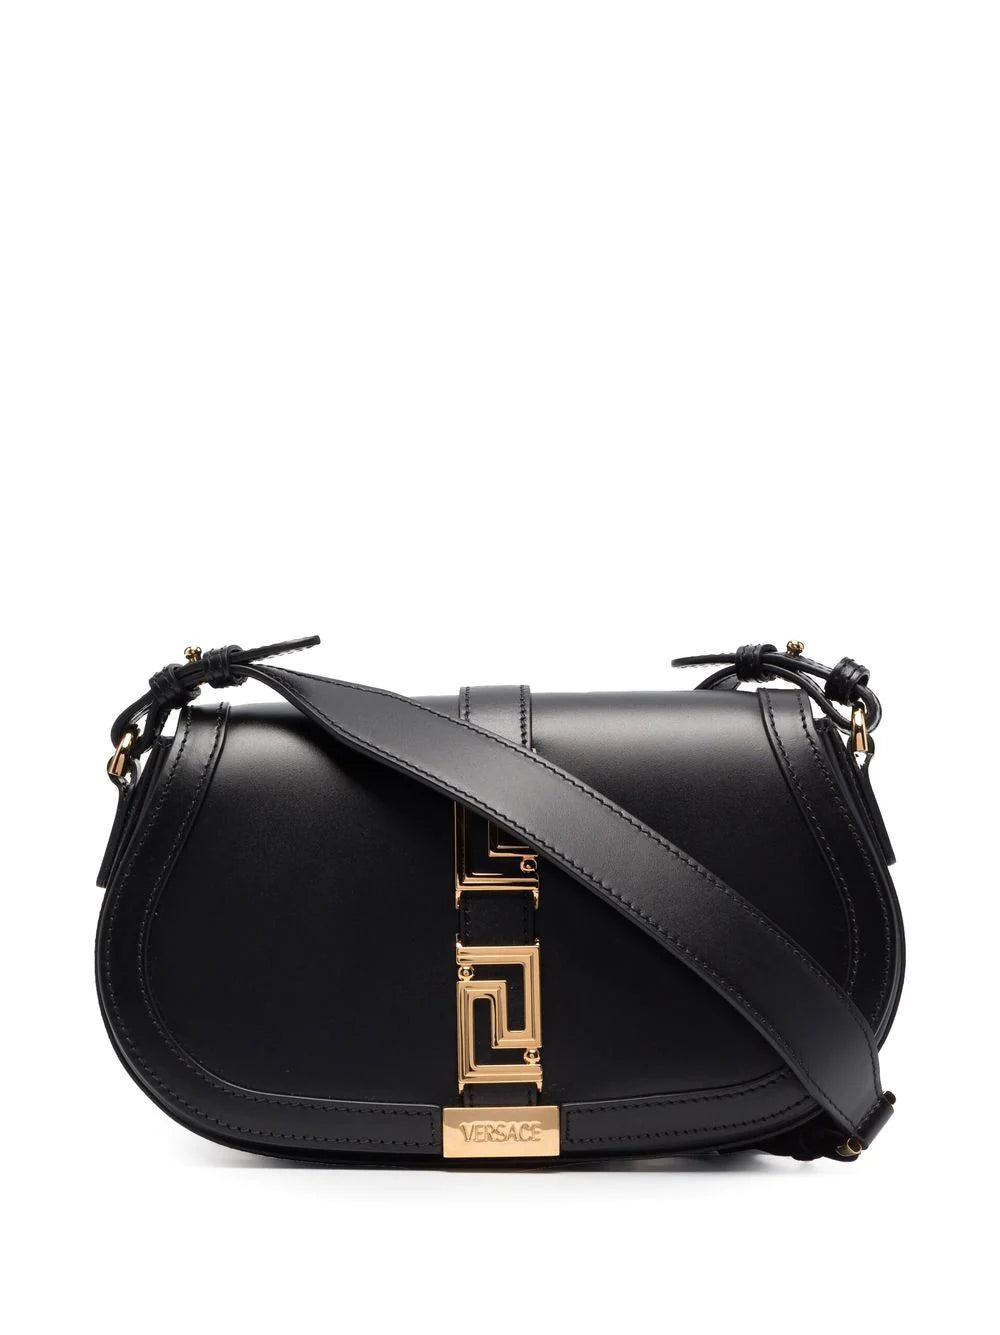 Versace Black Greca Goddess Medium Shoulder Bag